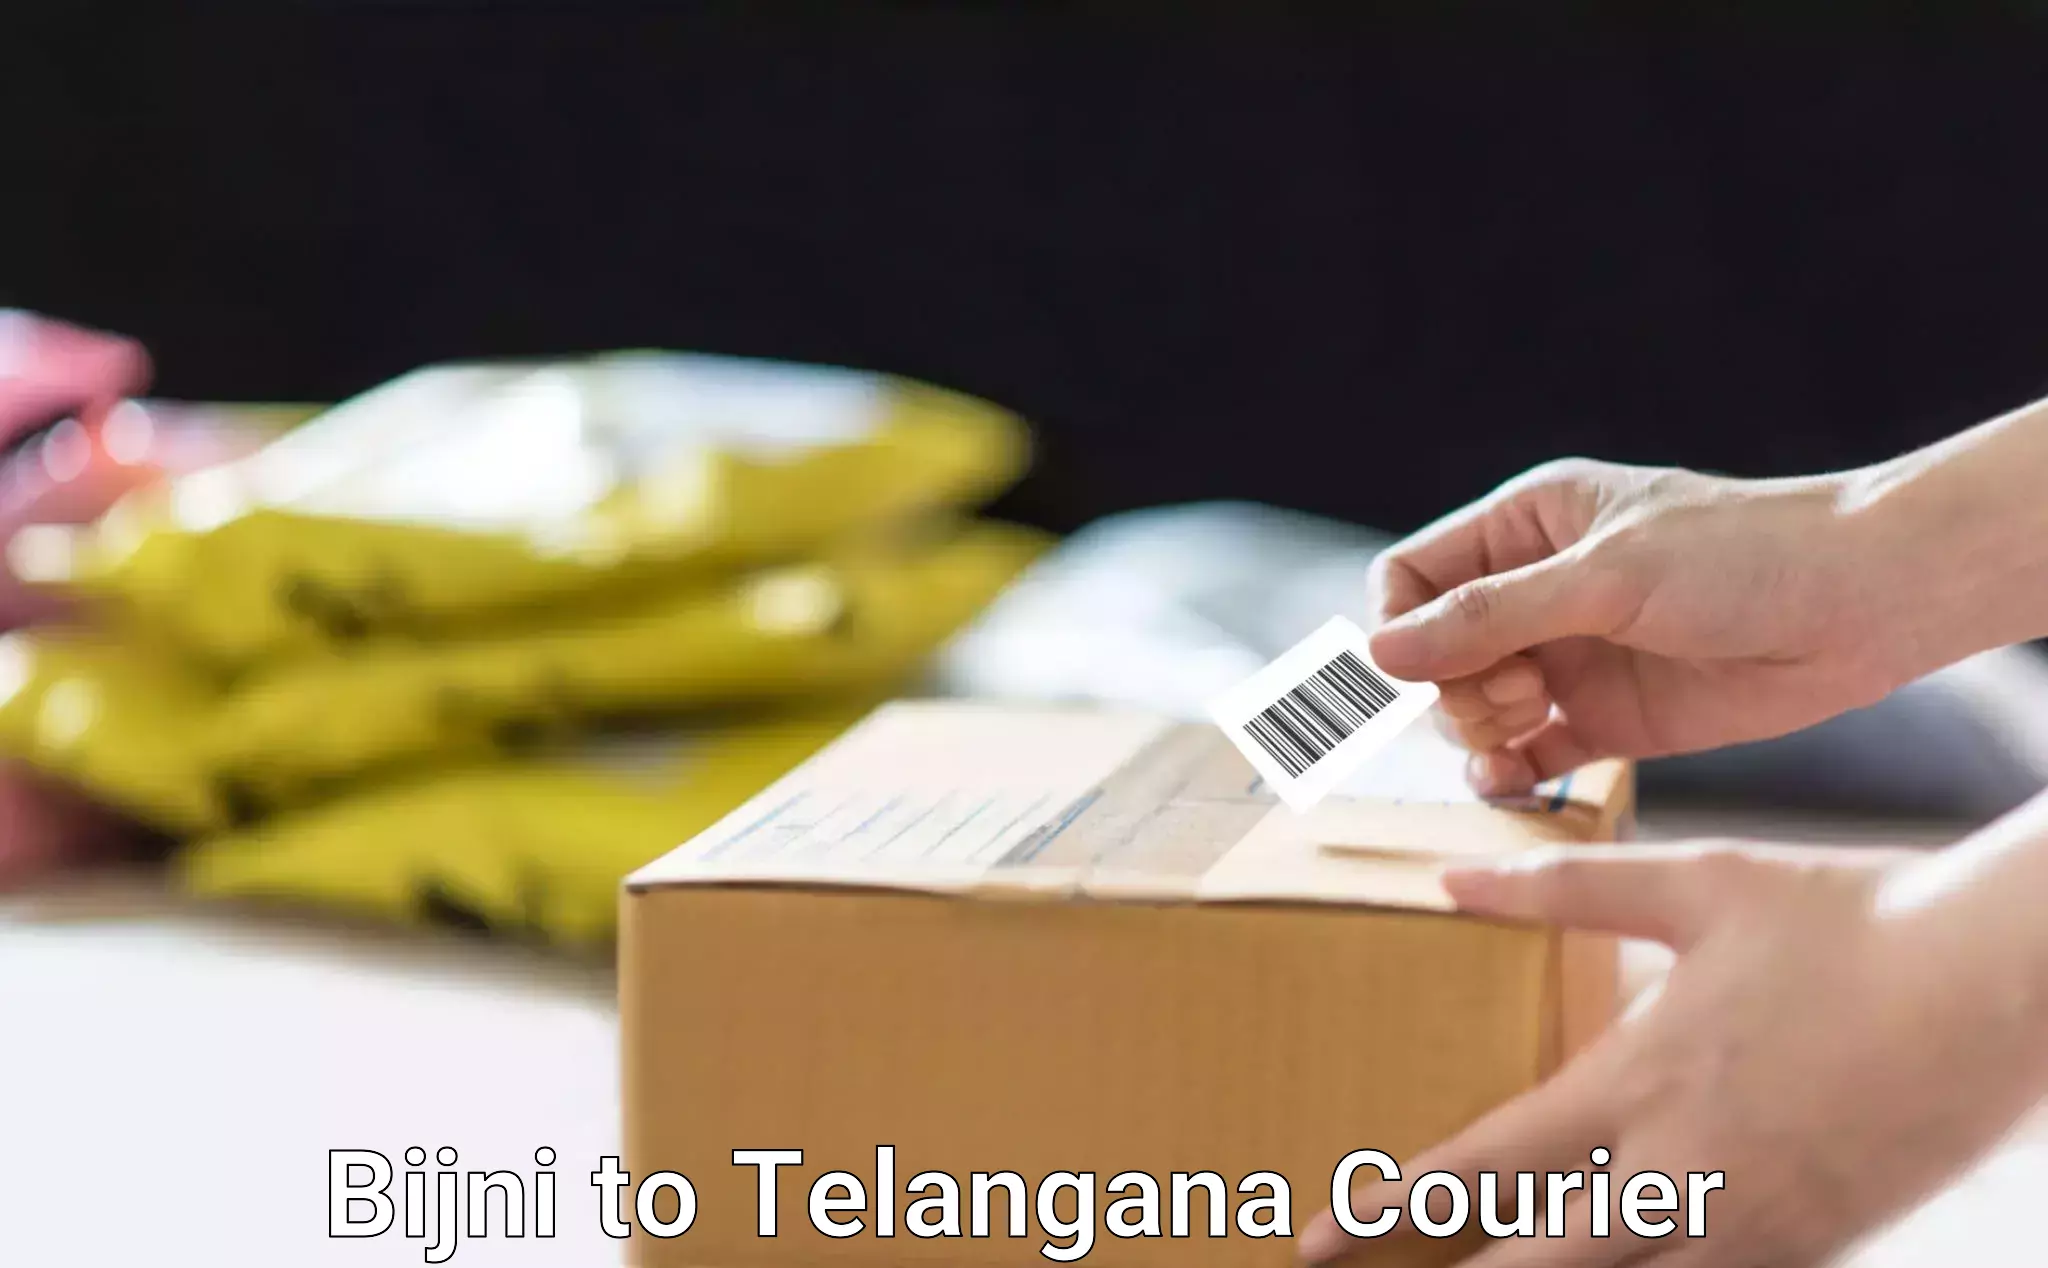 Supply chain delivery Bijni to Telangana